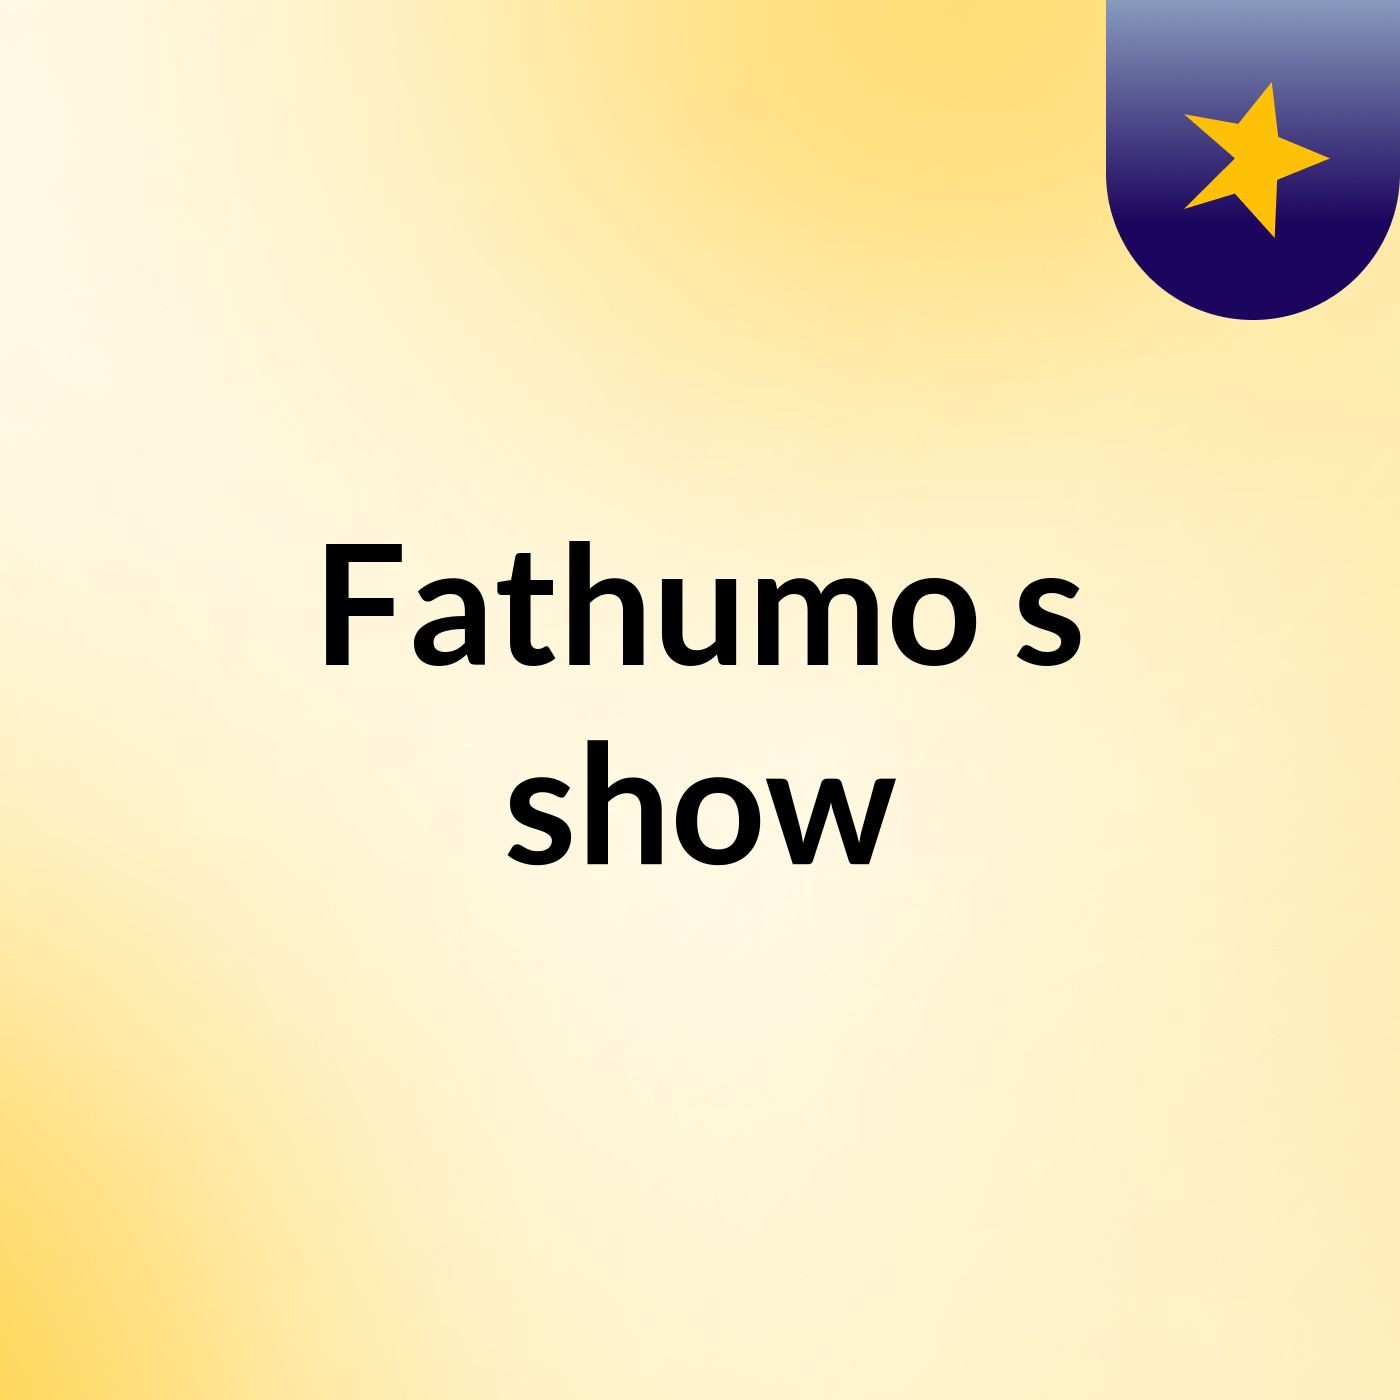 Fathumo's show